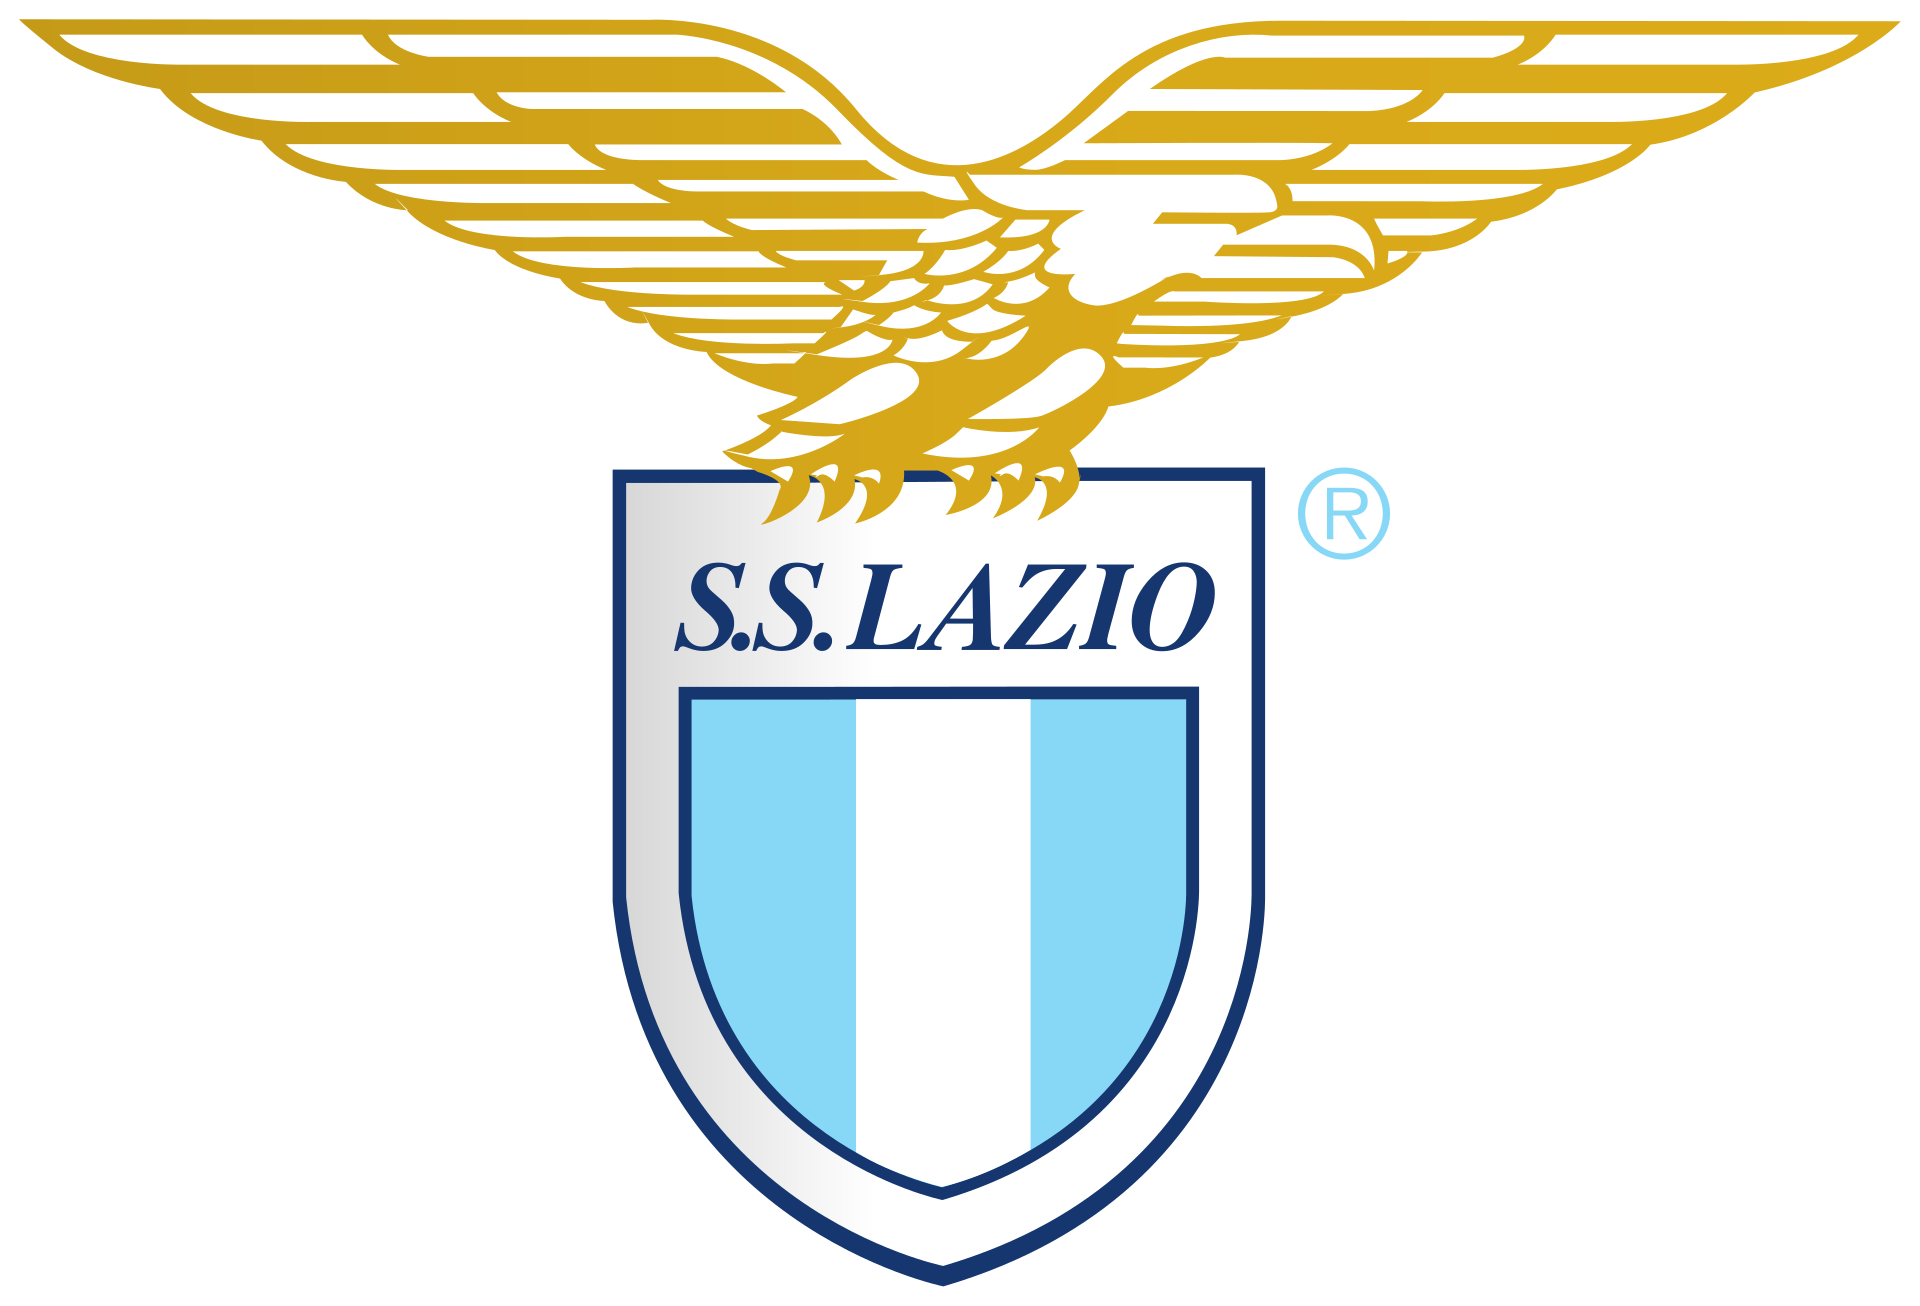 S.S. Lazio - Wikipedia bahasa Indonesia, ensiklopedia bebas